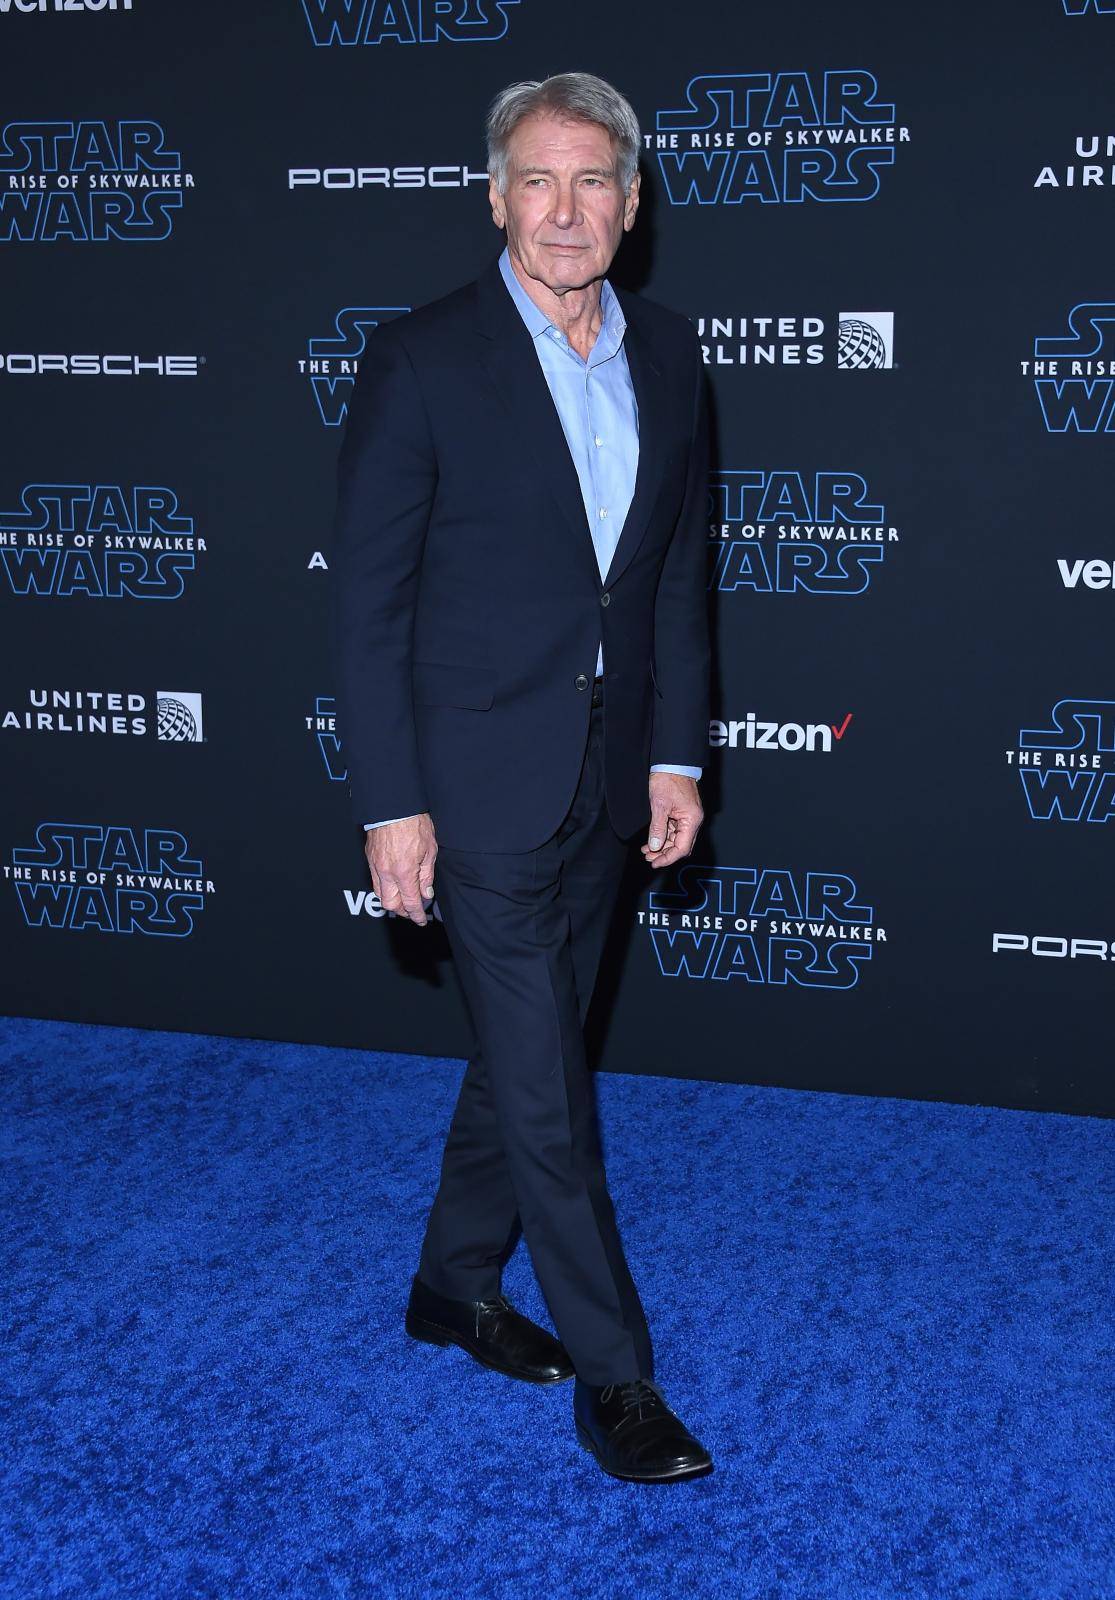 Star Wars: The Rise of Skywalker World Premiere - Los Angeles